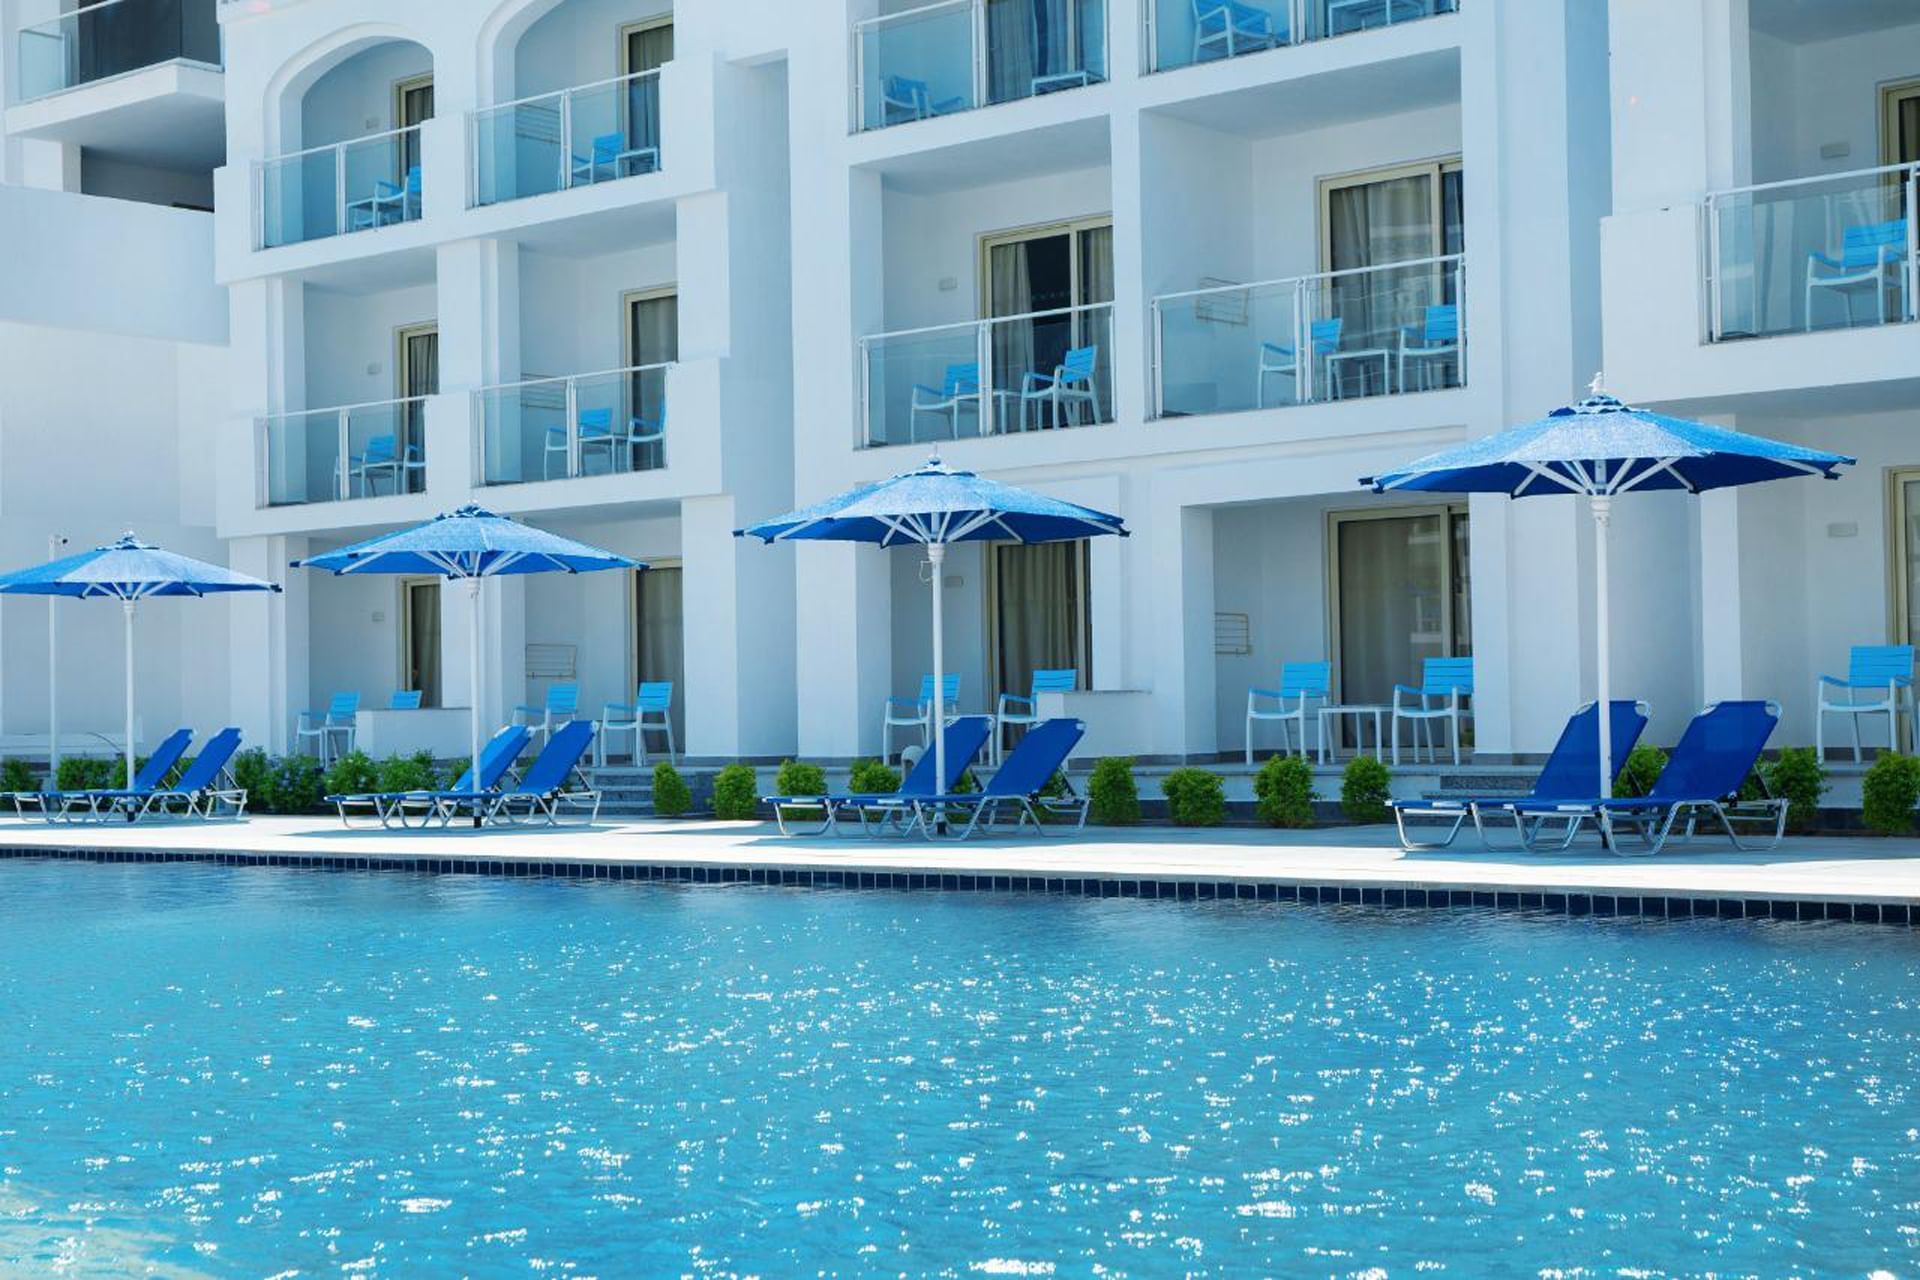 Отель Albatros Blu Spa Resort. Albatros Blu Spa 5. Альбатрос Блю спа Резорт Хургада. Albatros Blu Spa Resort Hurghada Adults only 16+ 5*.